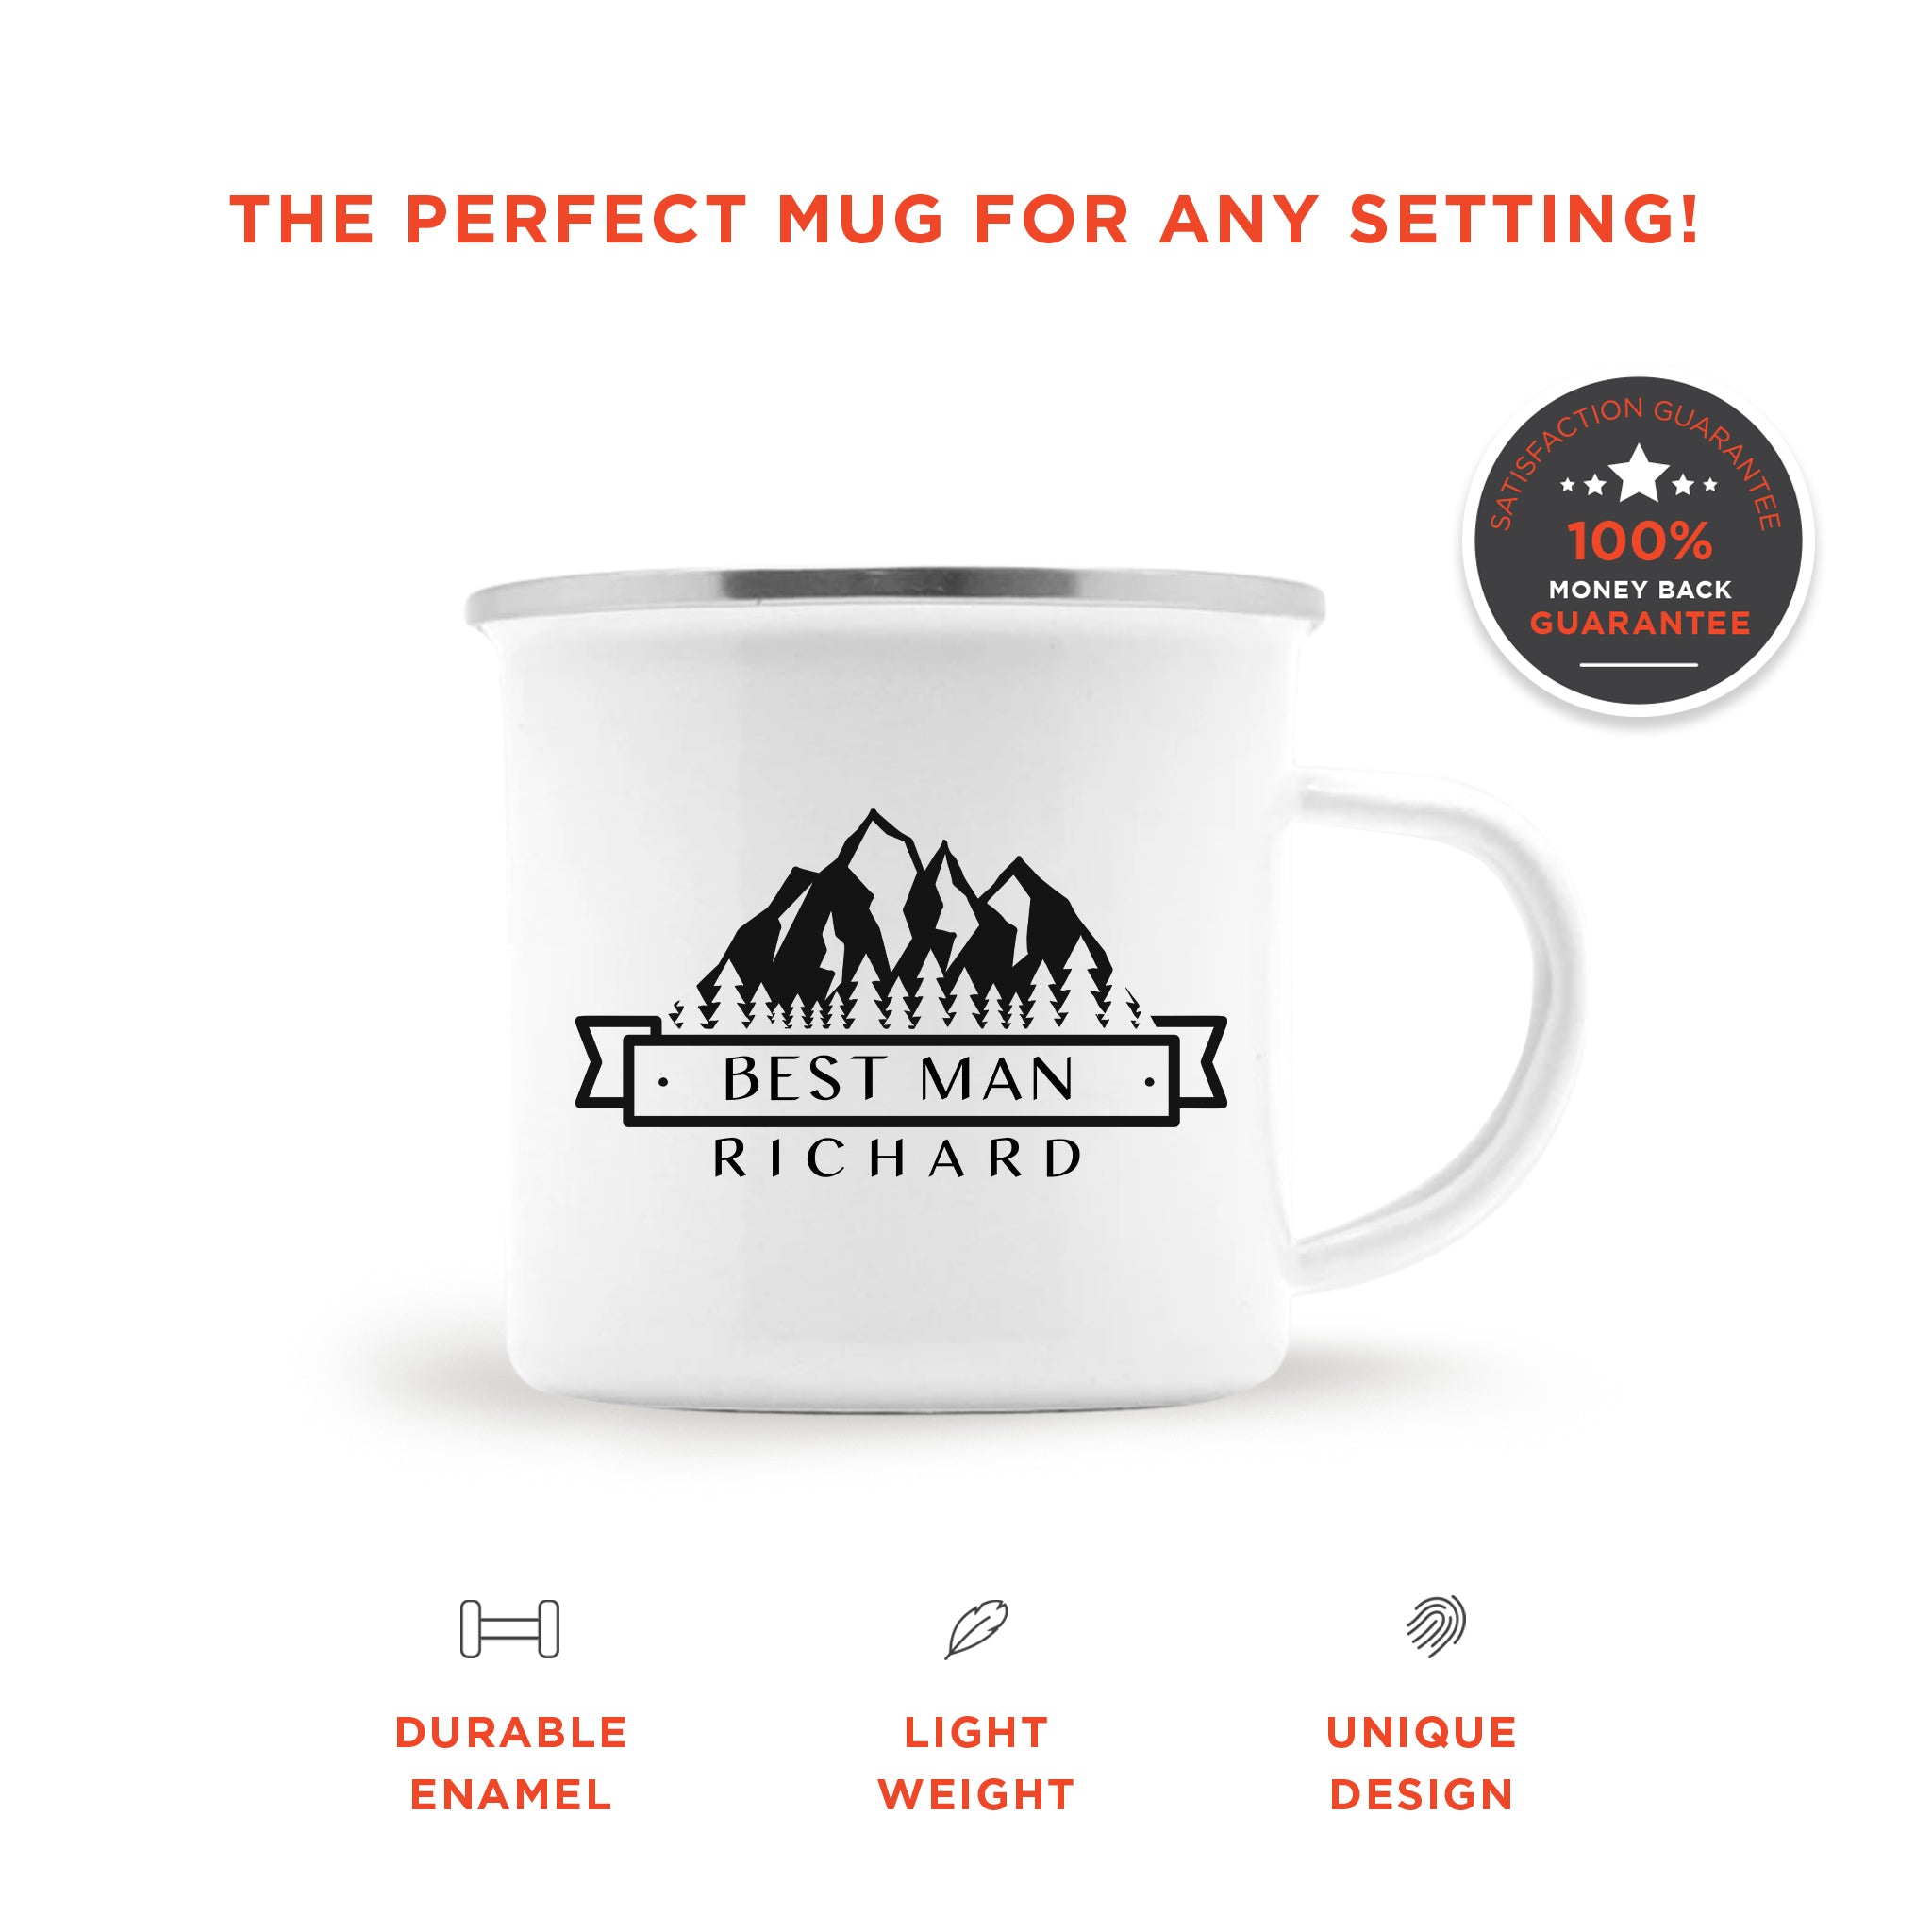 Personalized Groomsman Camping Mug